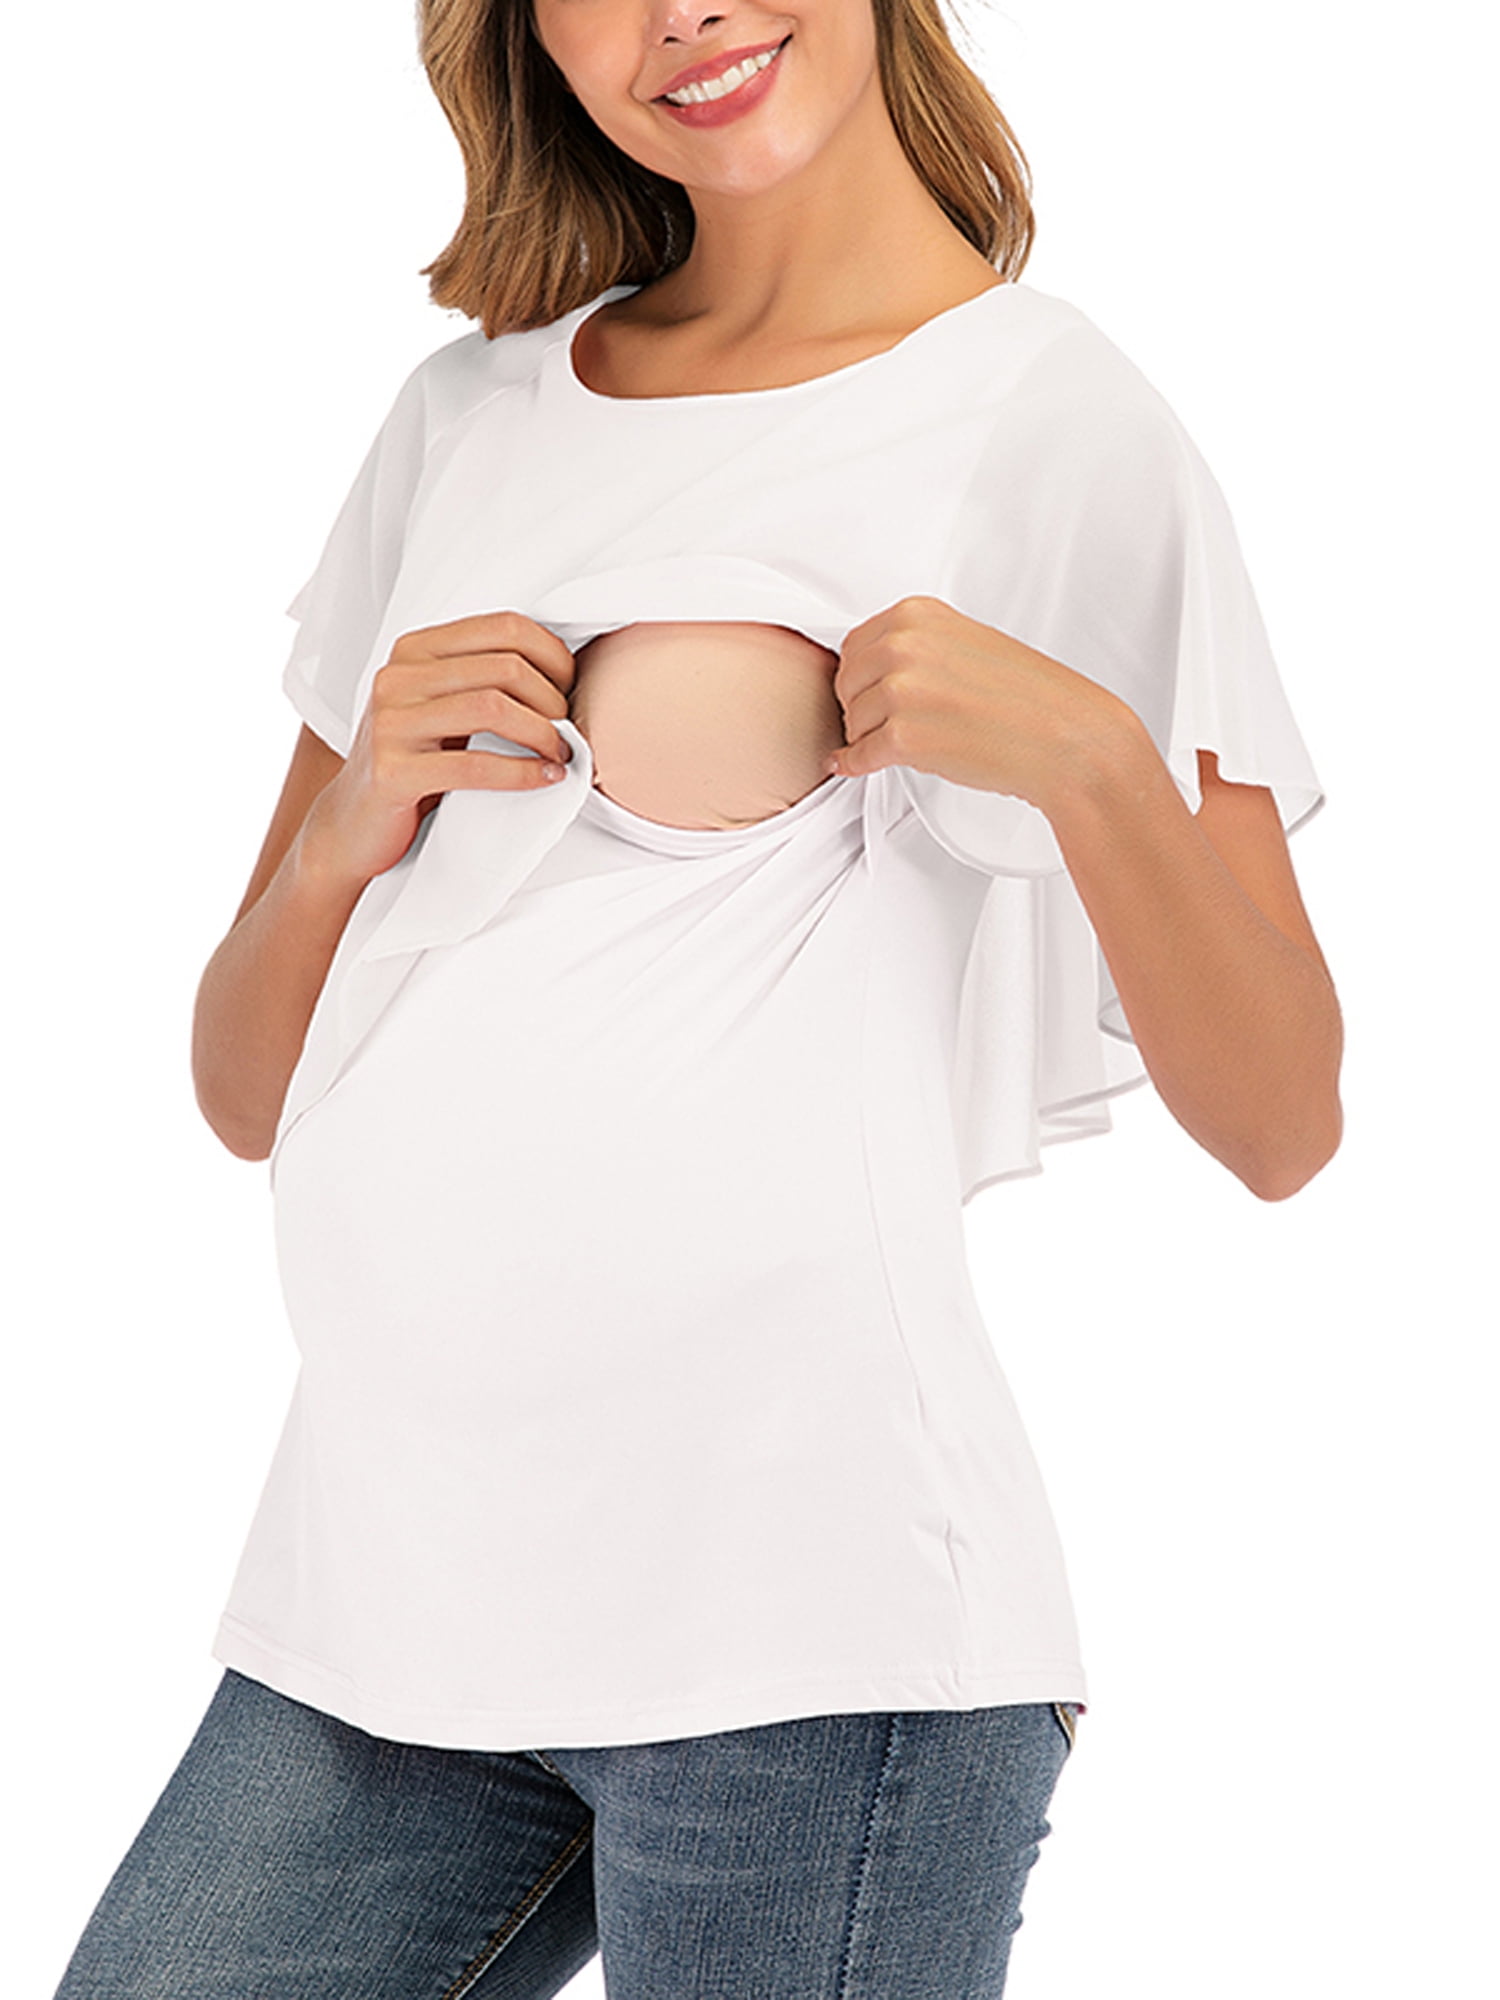 Maternity Blouse for Pregnant Women Nursing Breastfeeding Tops Pregnant Short Sleeve Shirts Breathable Summer Tees 